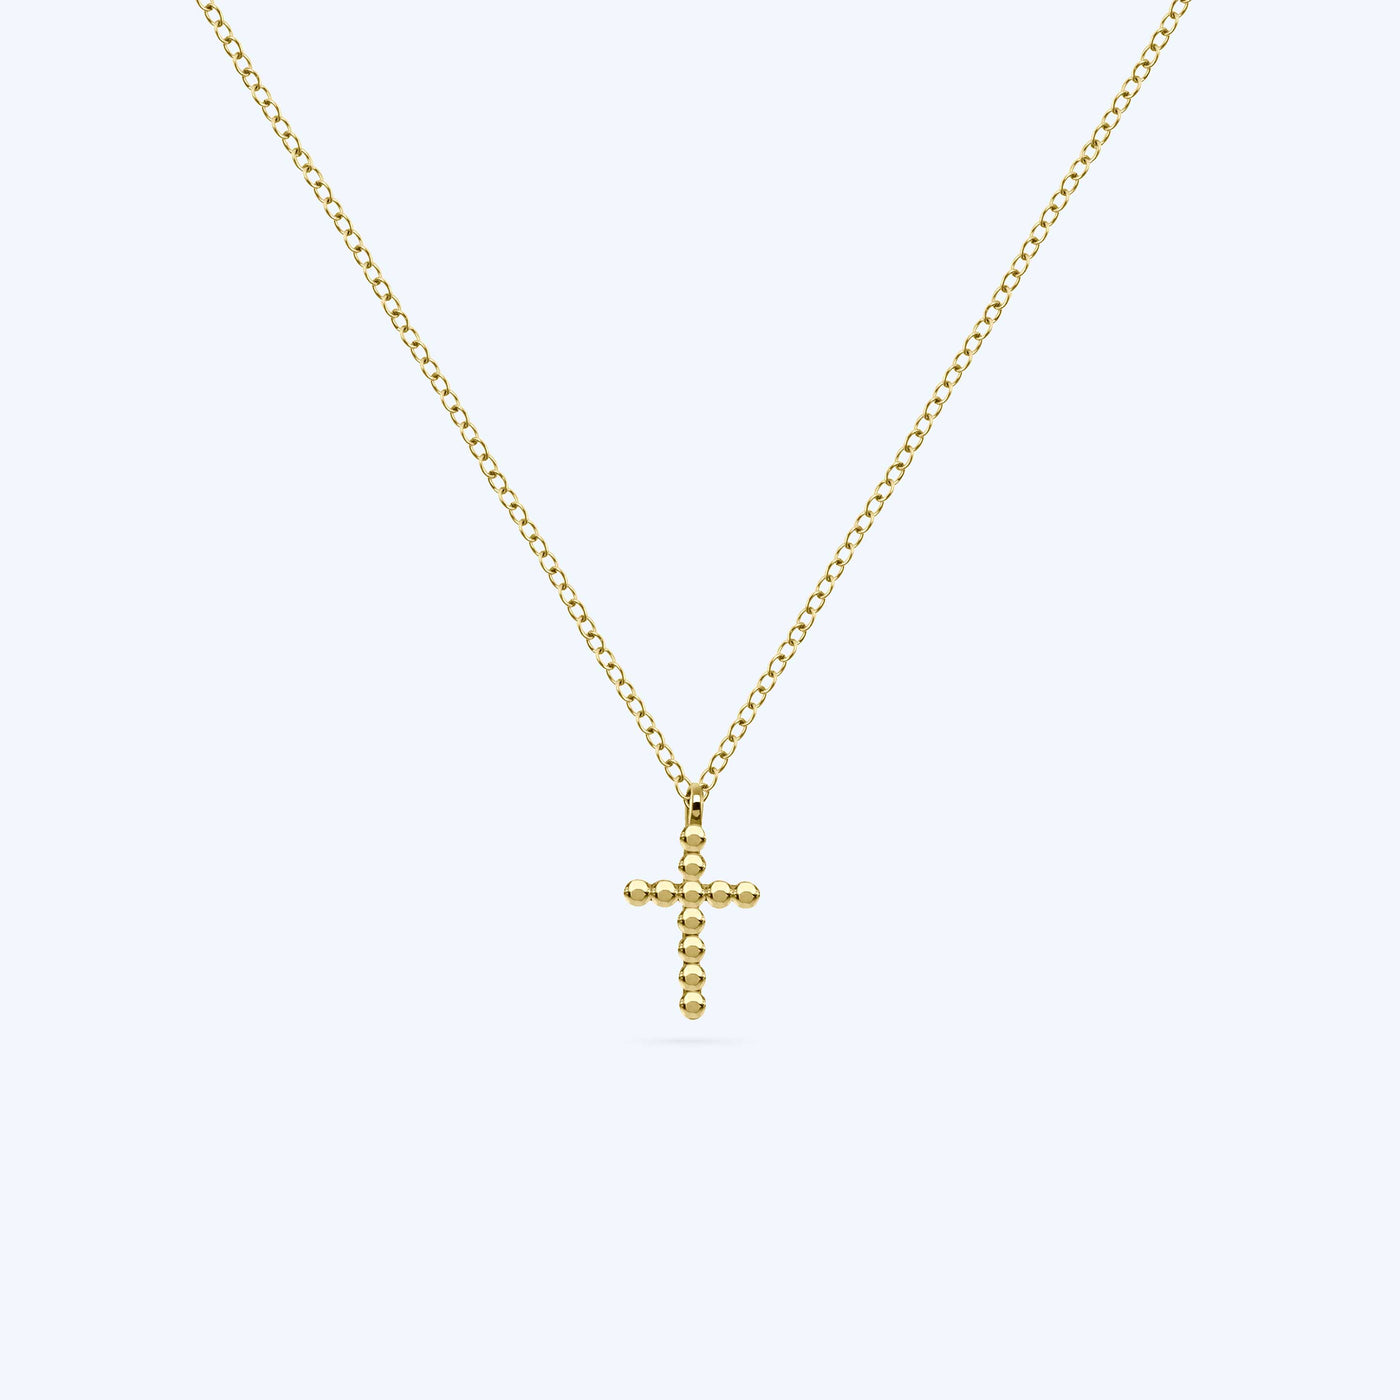 Cameron Cross Necklace